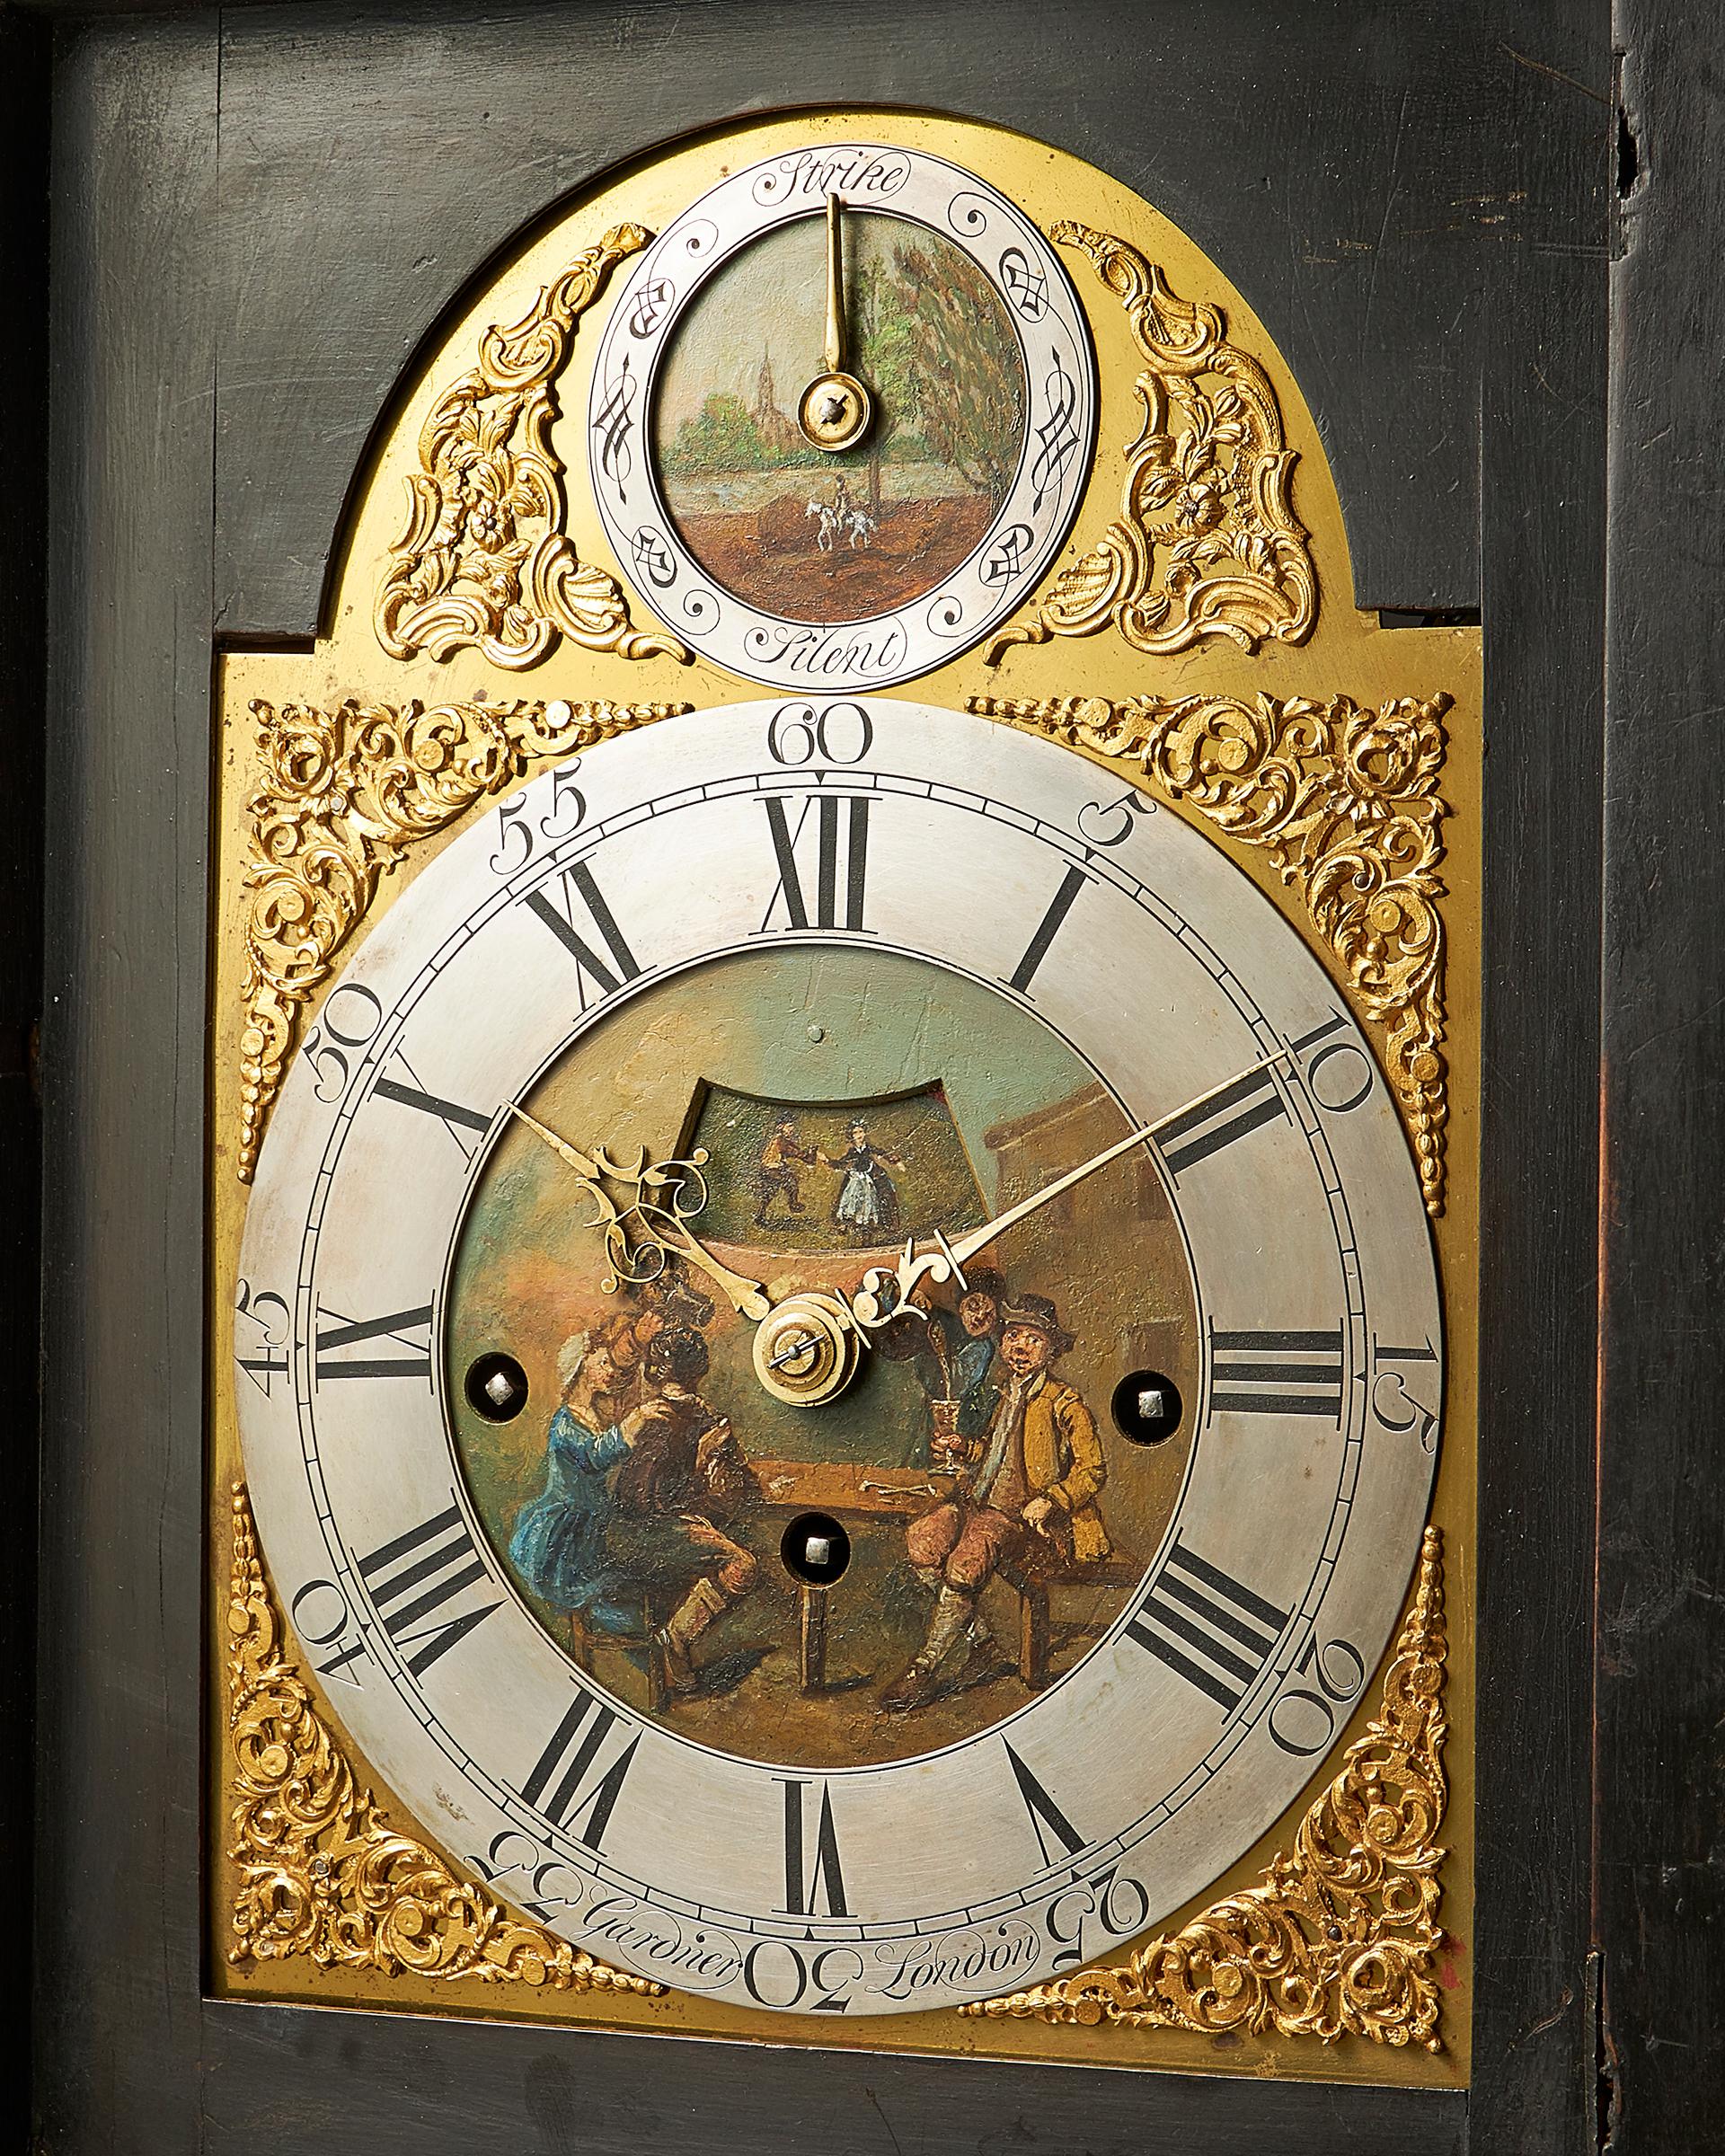 Cherry Extremely Rare George III 18th Century Quarter-Striking Bracket Clock, Signed